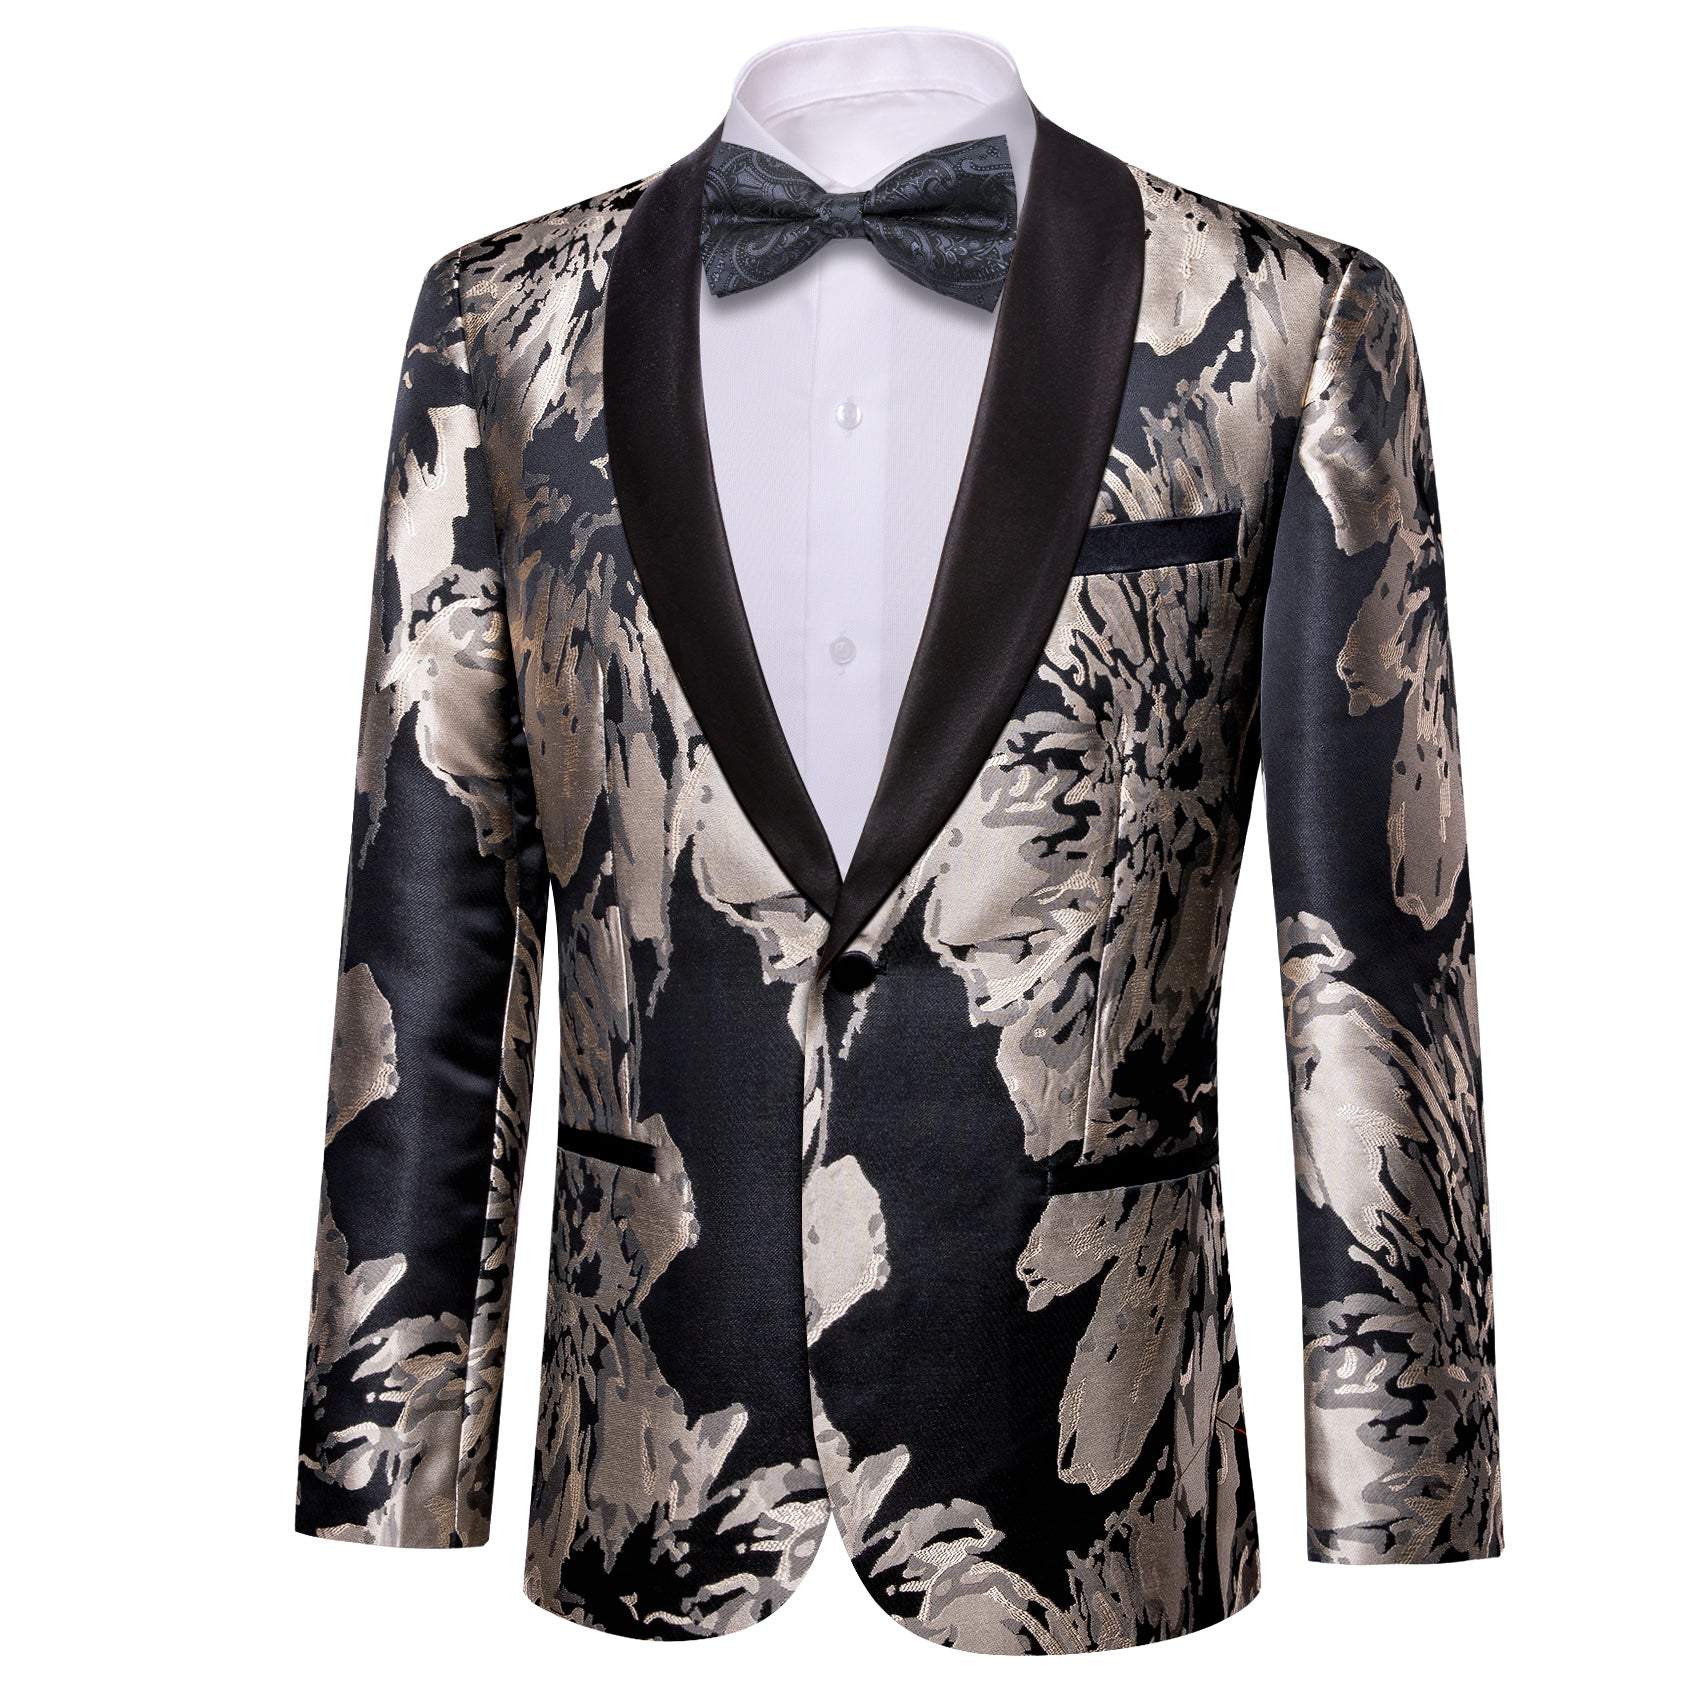 Men's Dress Party Black Grey Floral Suit Jacket Slim One Button Stylish Blazer